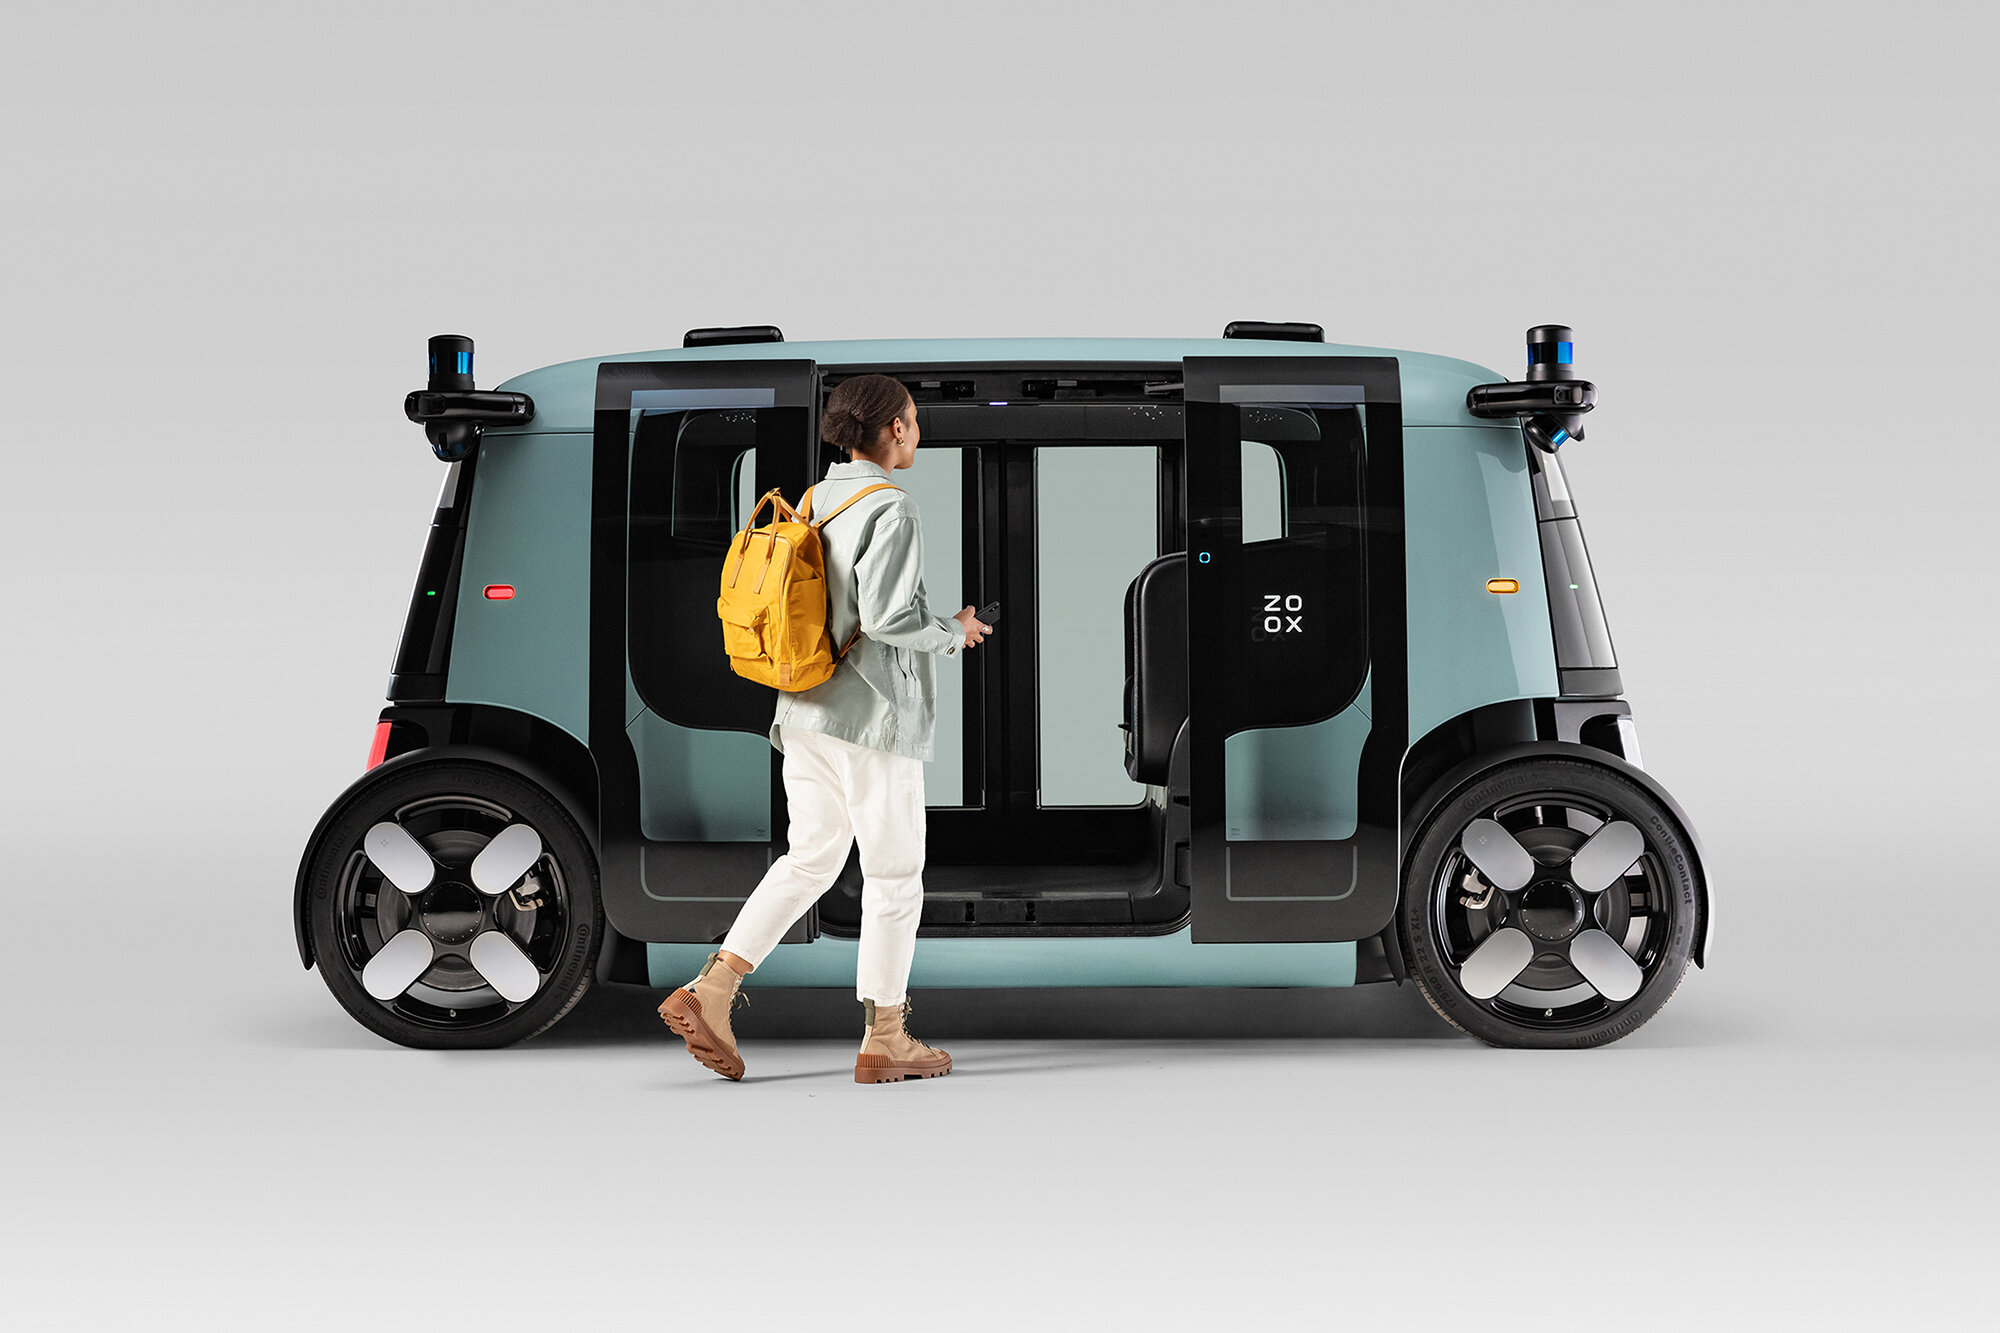 The exterior design of Zoox's electric, autonomous vehicle designed for urban environments